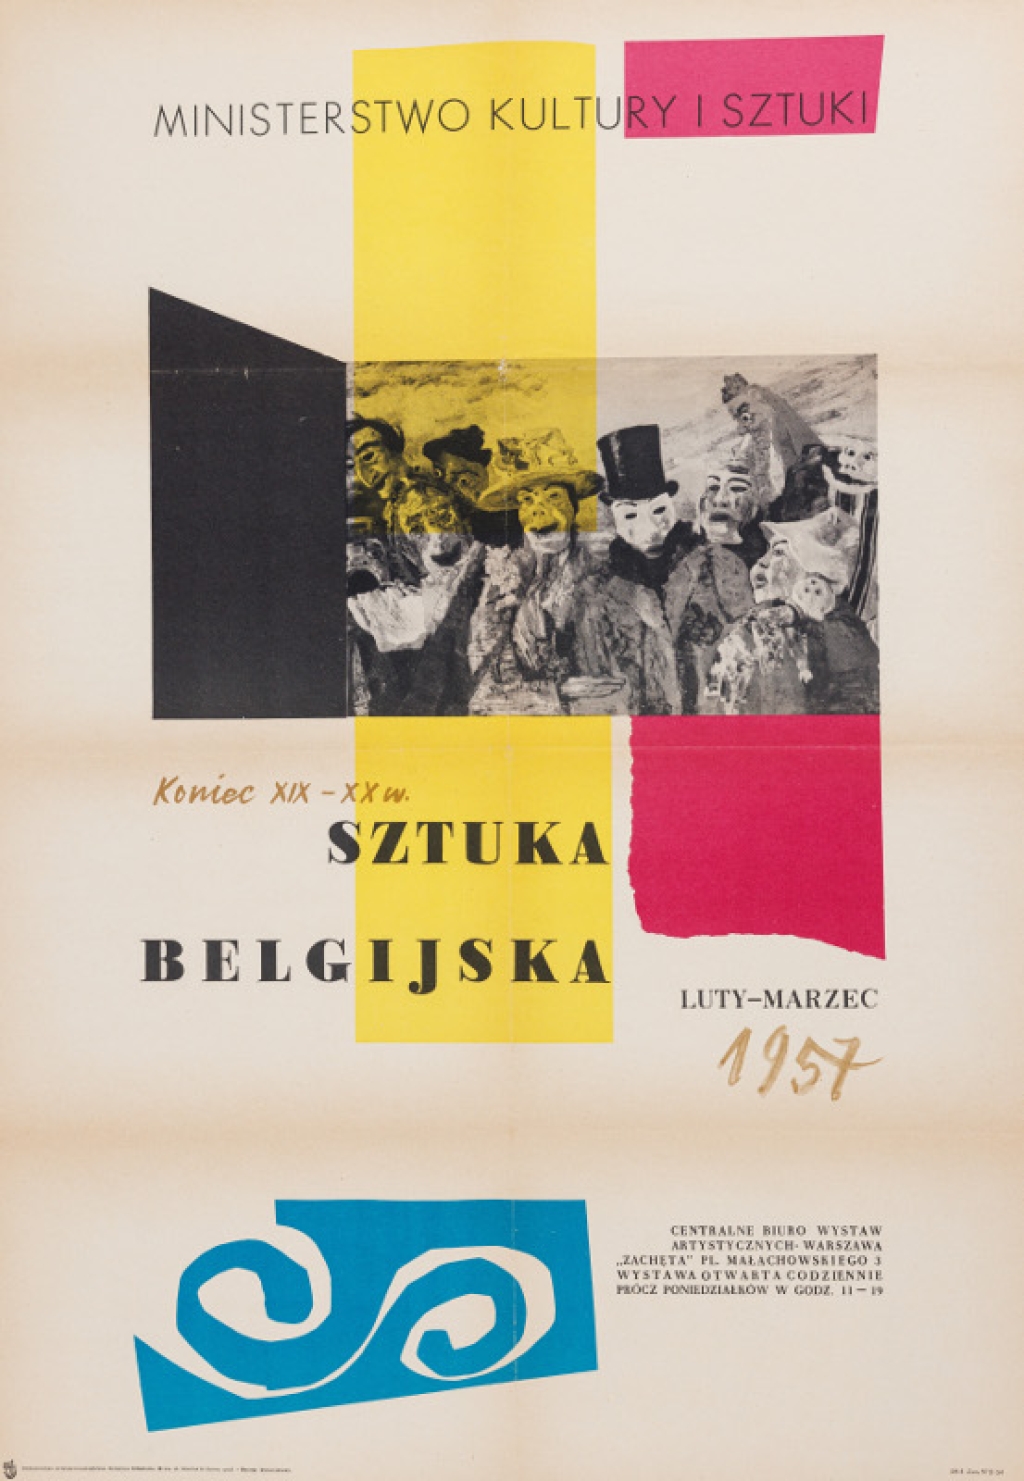 [plakat, 1957] Sztuka belgijska, koniec XIX - XX w. Luty-marzec 1957